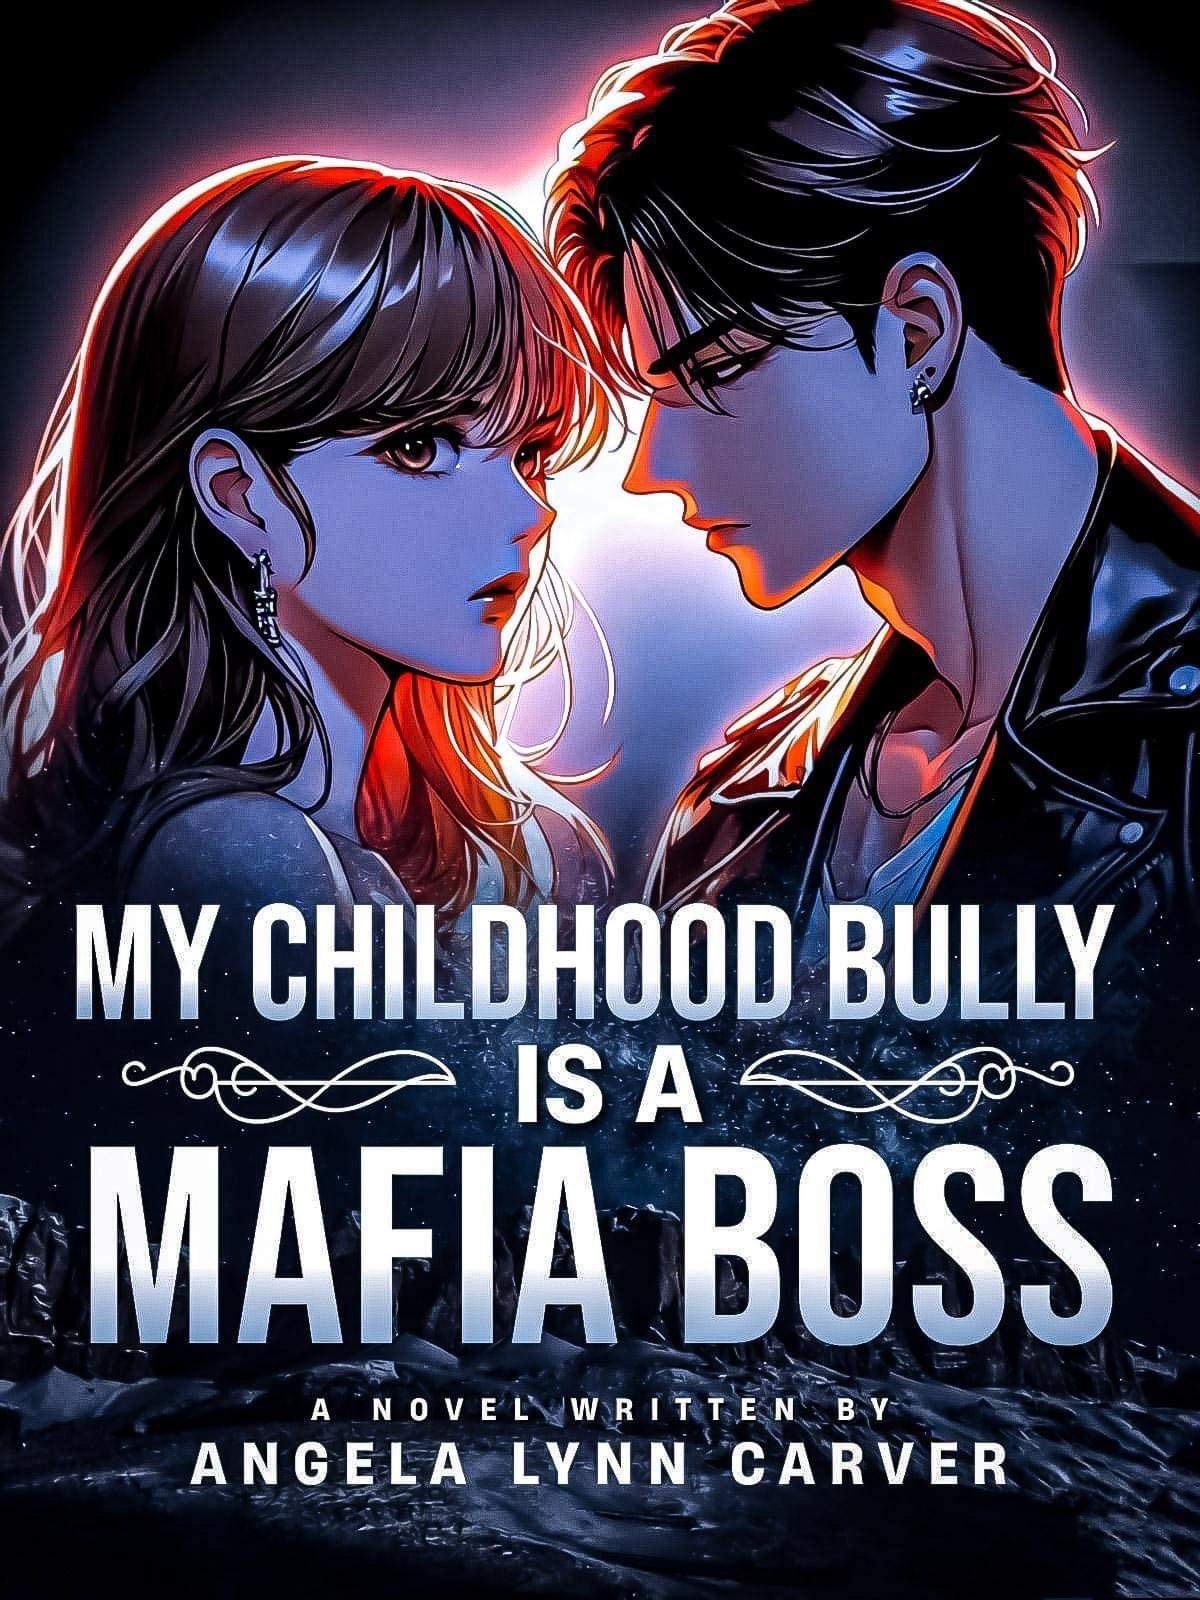 My Childhood Bully is a Mafia Boss